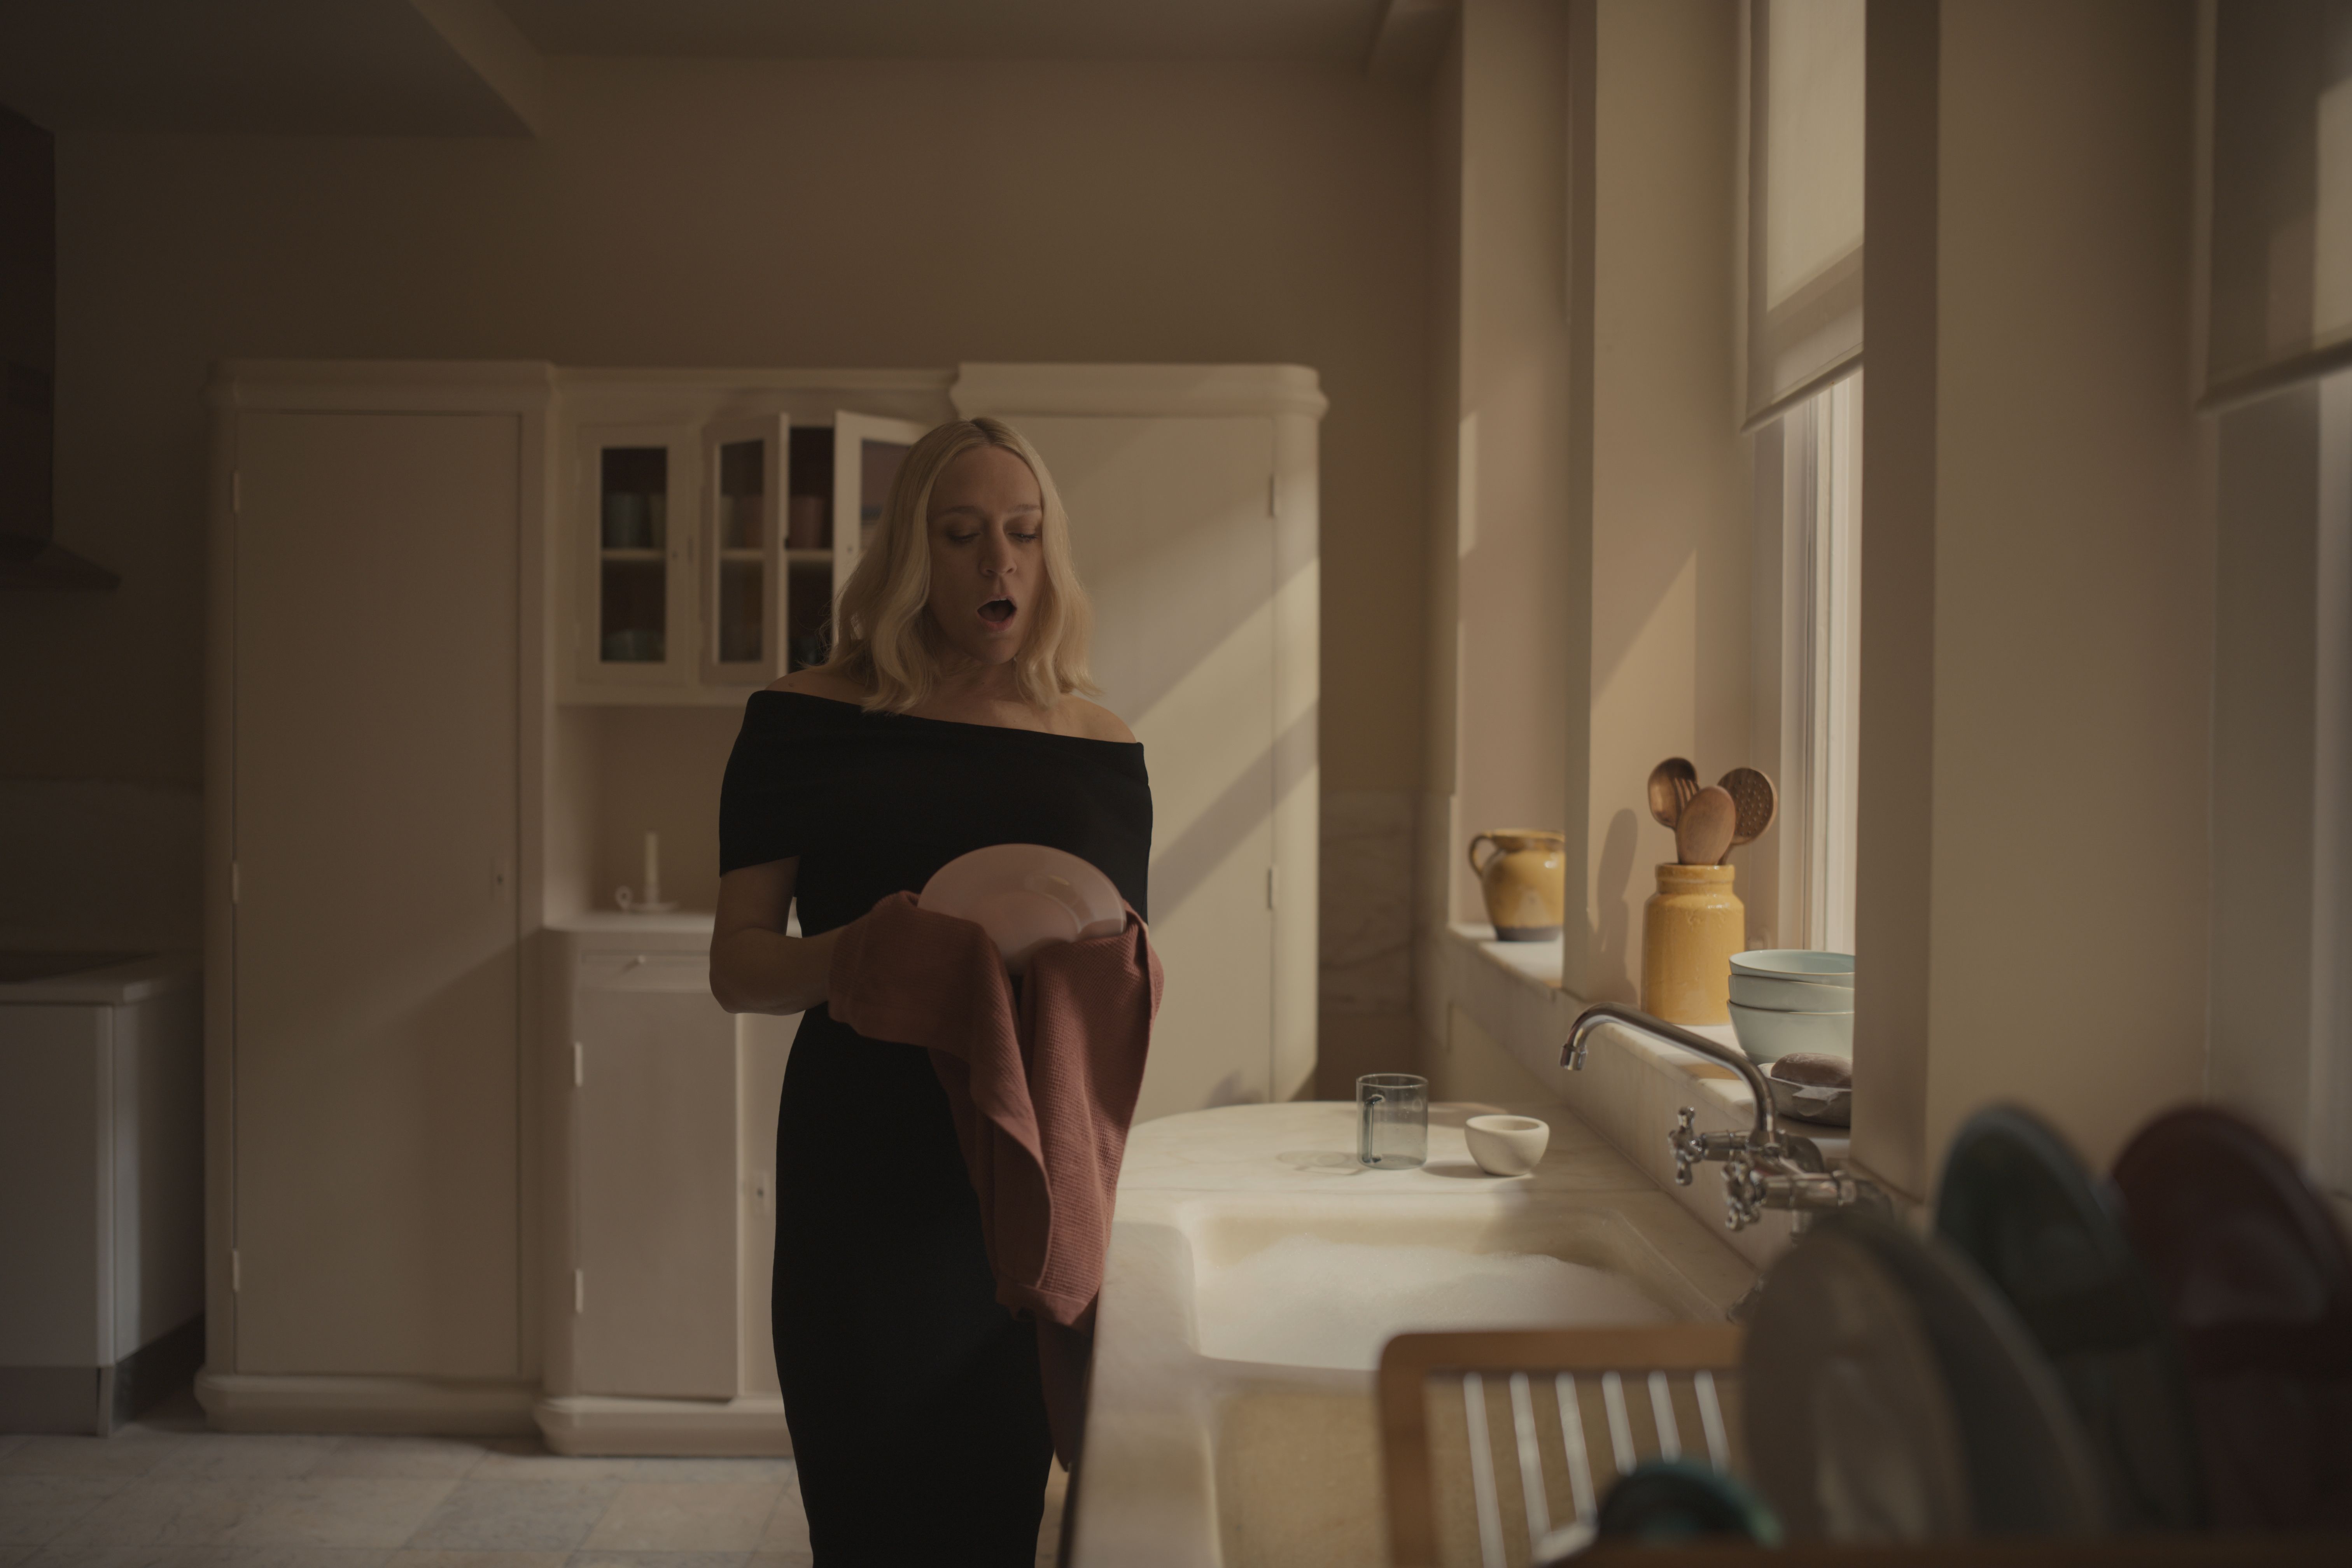 Soedan Balling Per Zara Home's Launches "The Last Line" Film Featuring Chloë Sevigny in the  Casa de Serralves